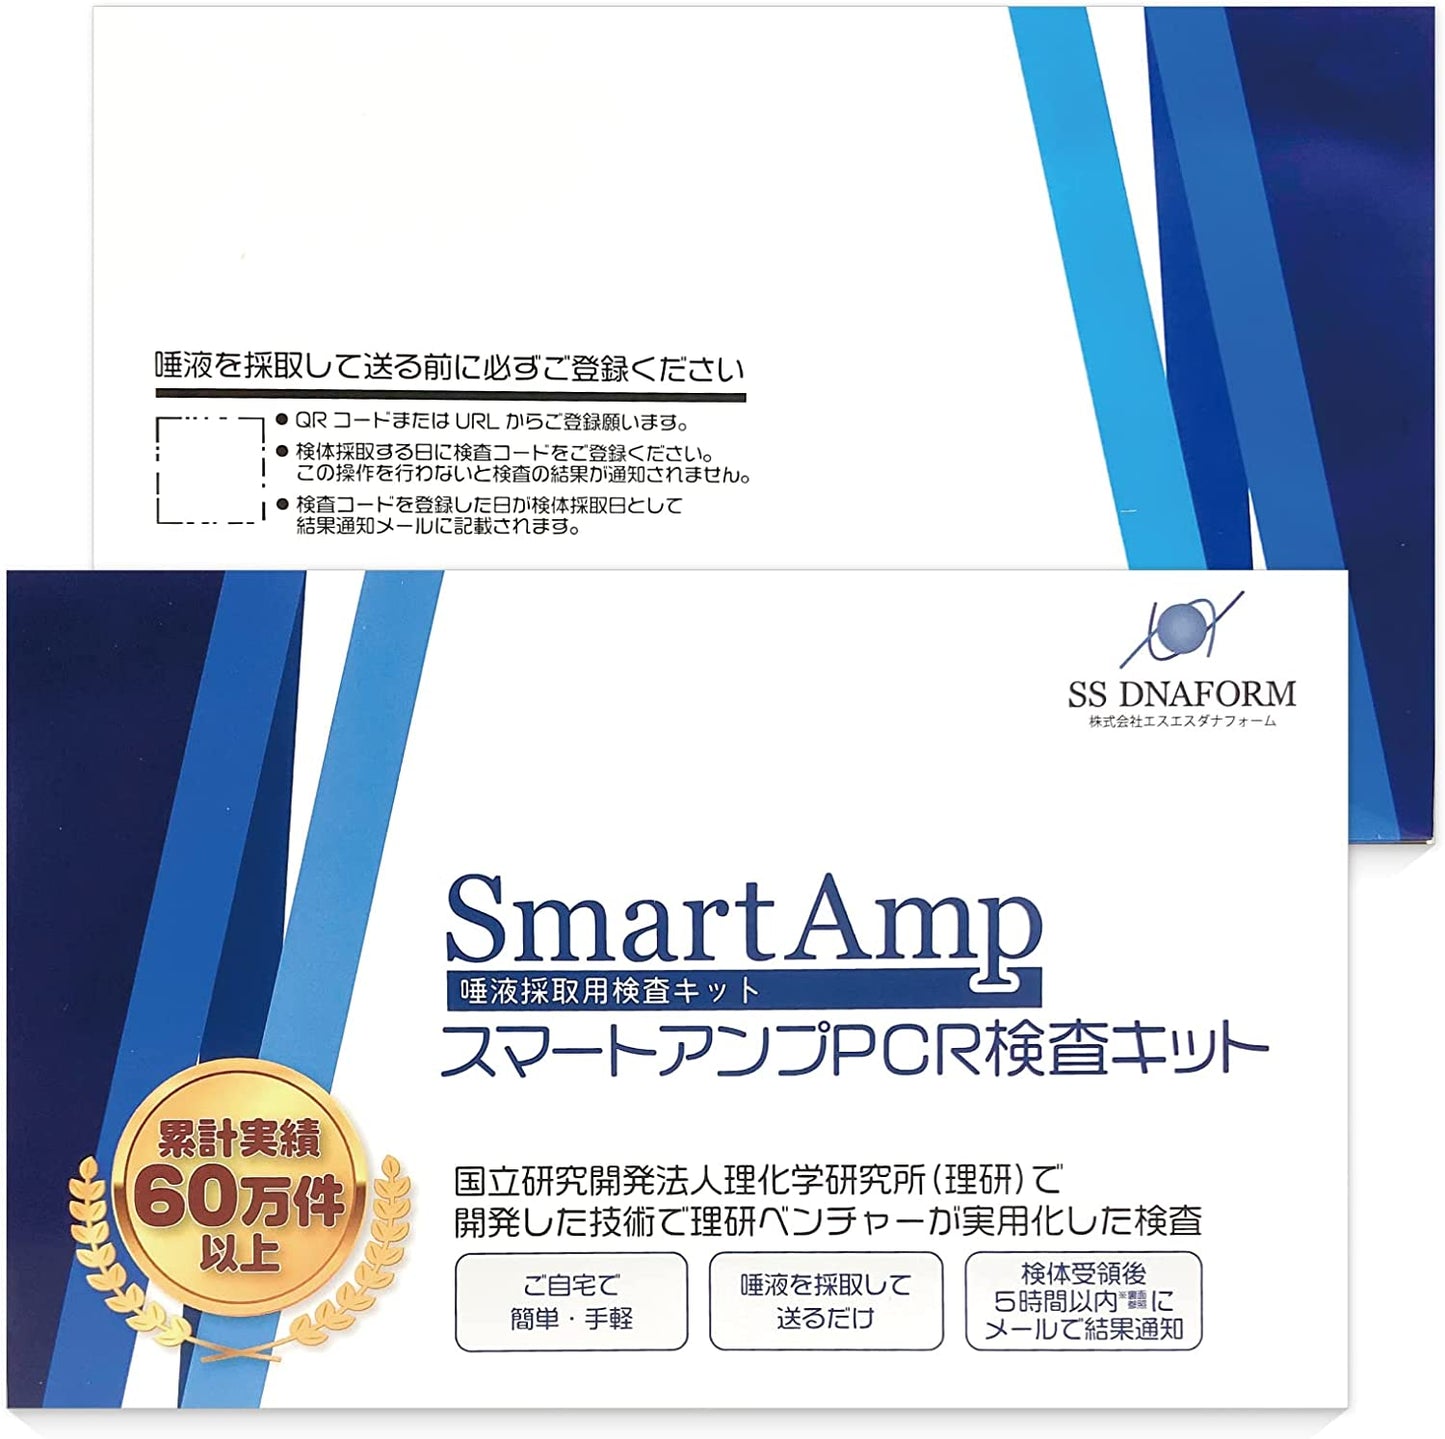 SS Dnaform SmartAmp 신형 코로나 PCR 검사 키트 1개【오미크론주·변이주 대응】검사기관에서 검사 연구용